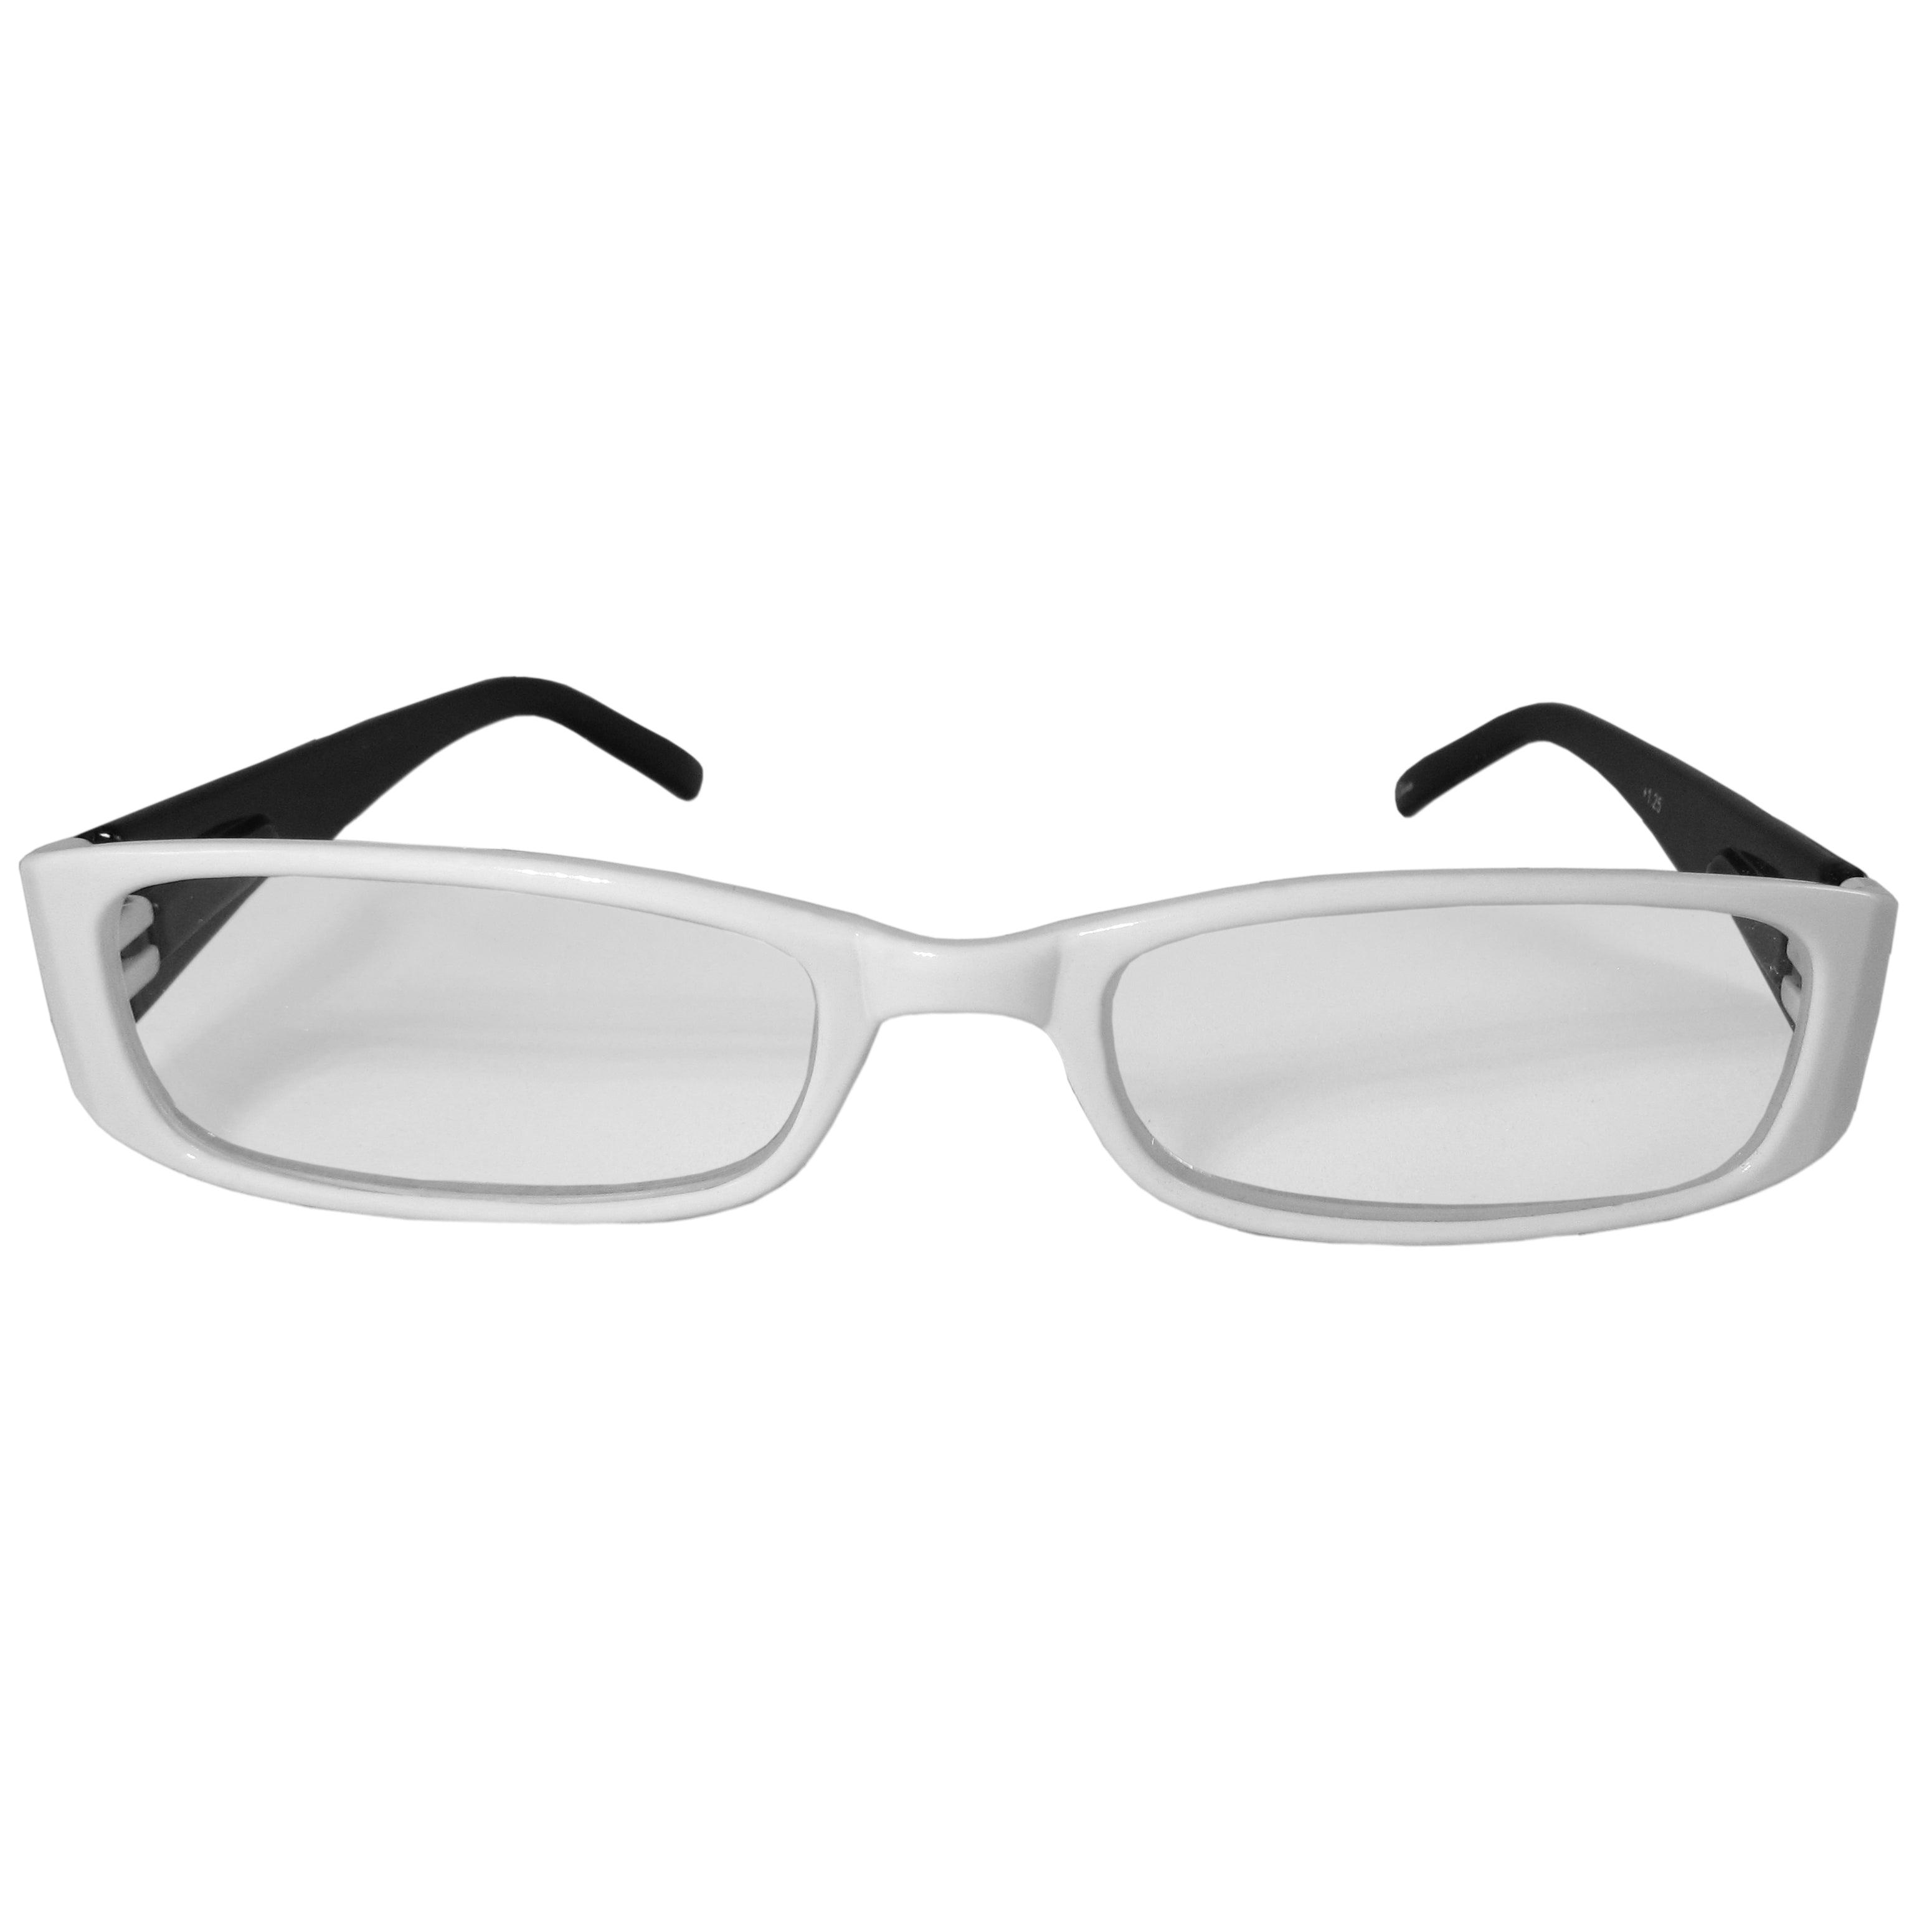 White and Black Reading Glasses Power +2.00, 3 pack - Flyclothing LLC